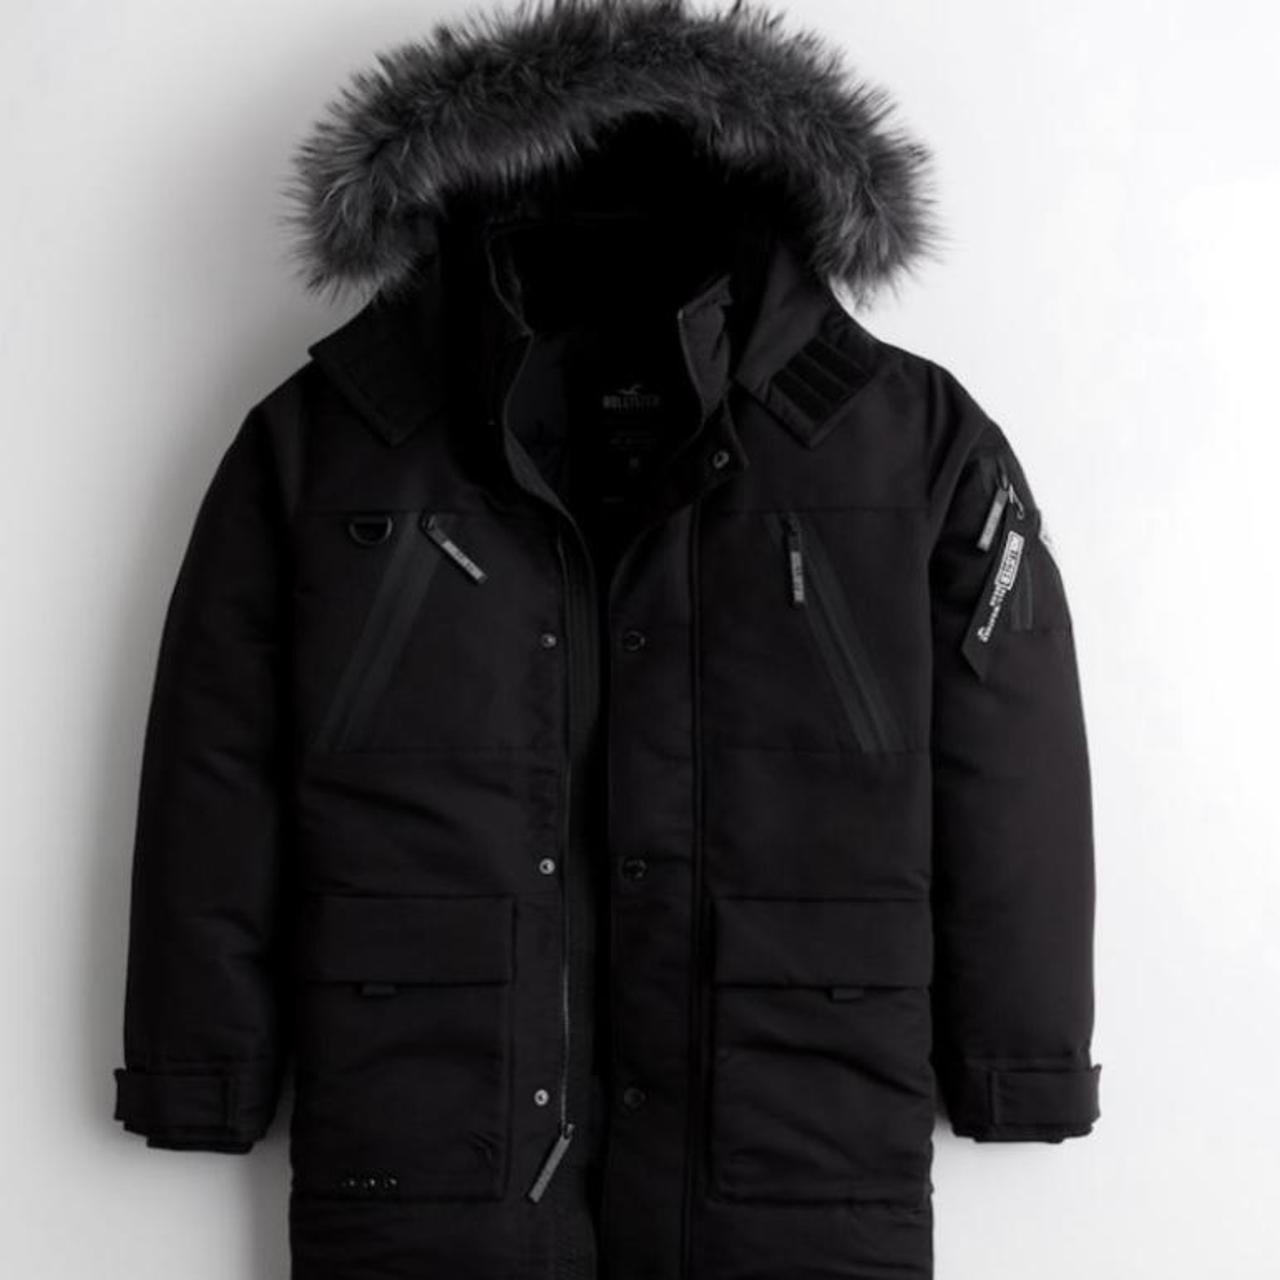 Hollister faux fur lined hooded parka jacket in black